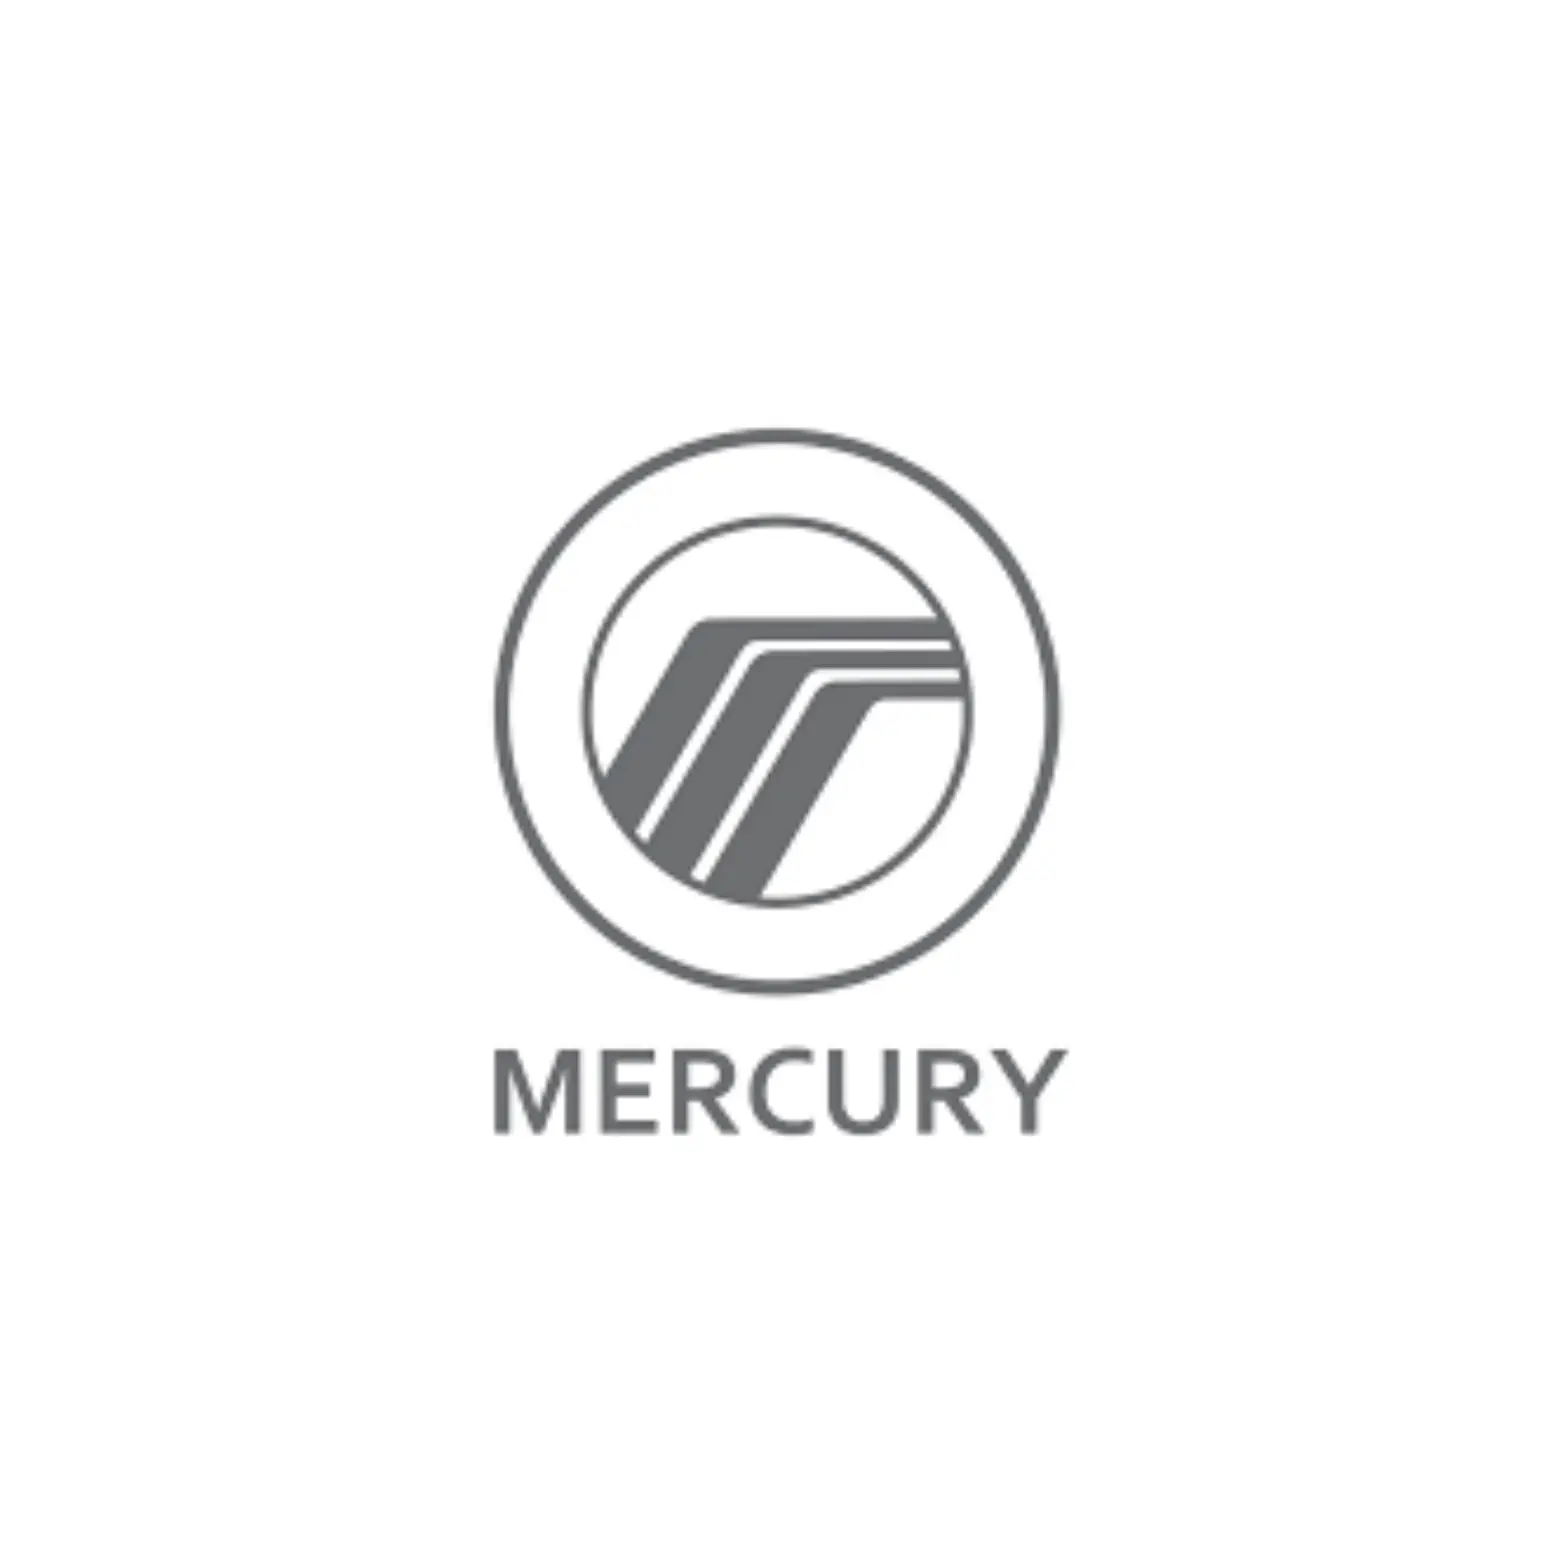 Mercury Works